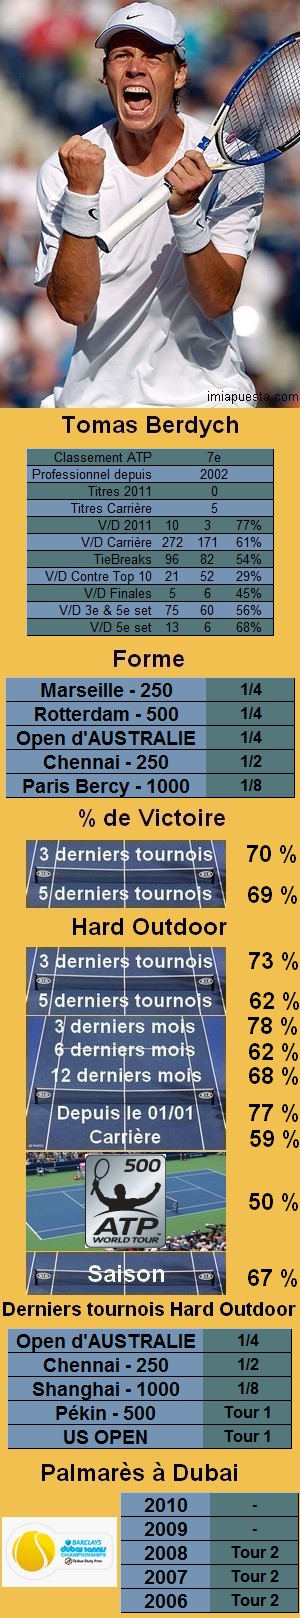 Statistiques tennis Tomas Berdych